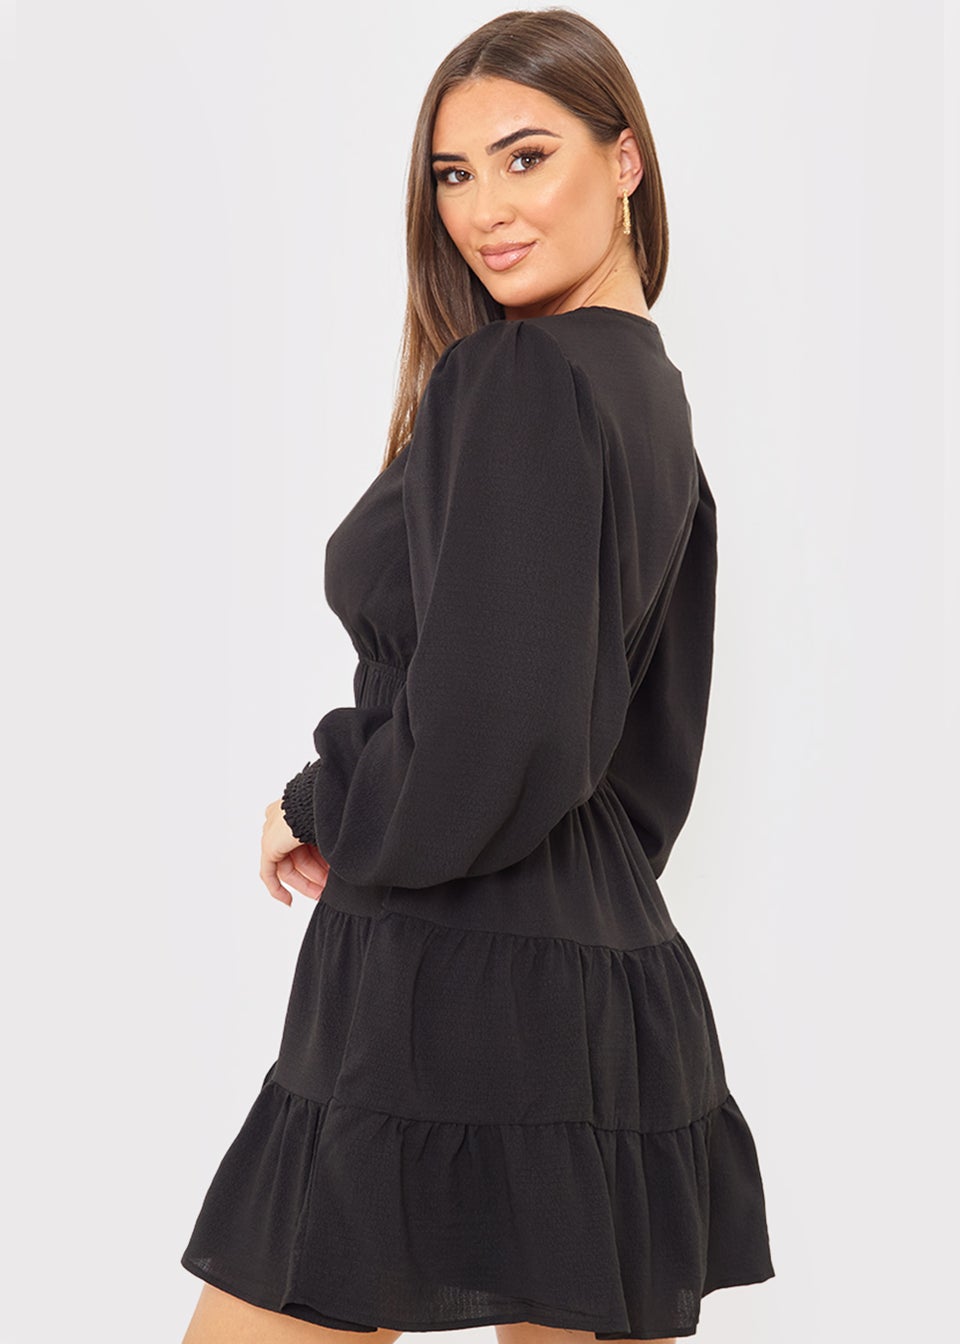 In the Style Danielle Black Crinkle Plunge Mini Dress